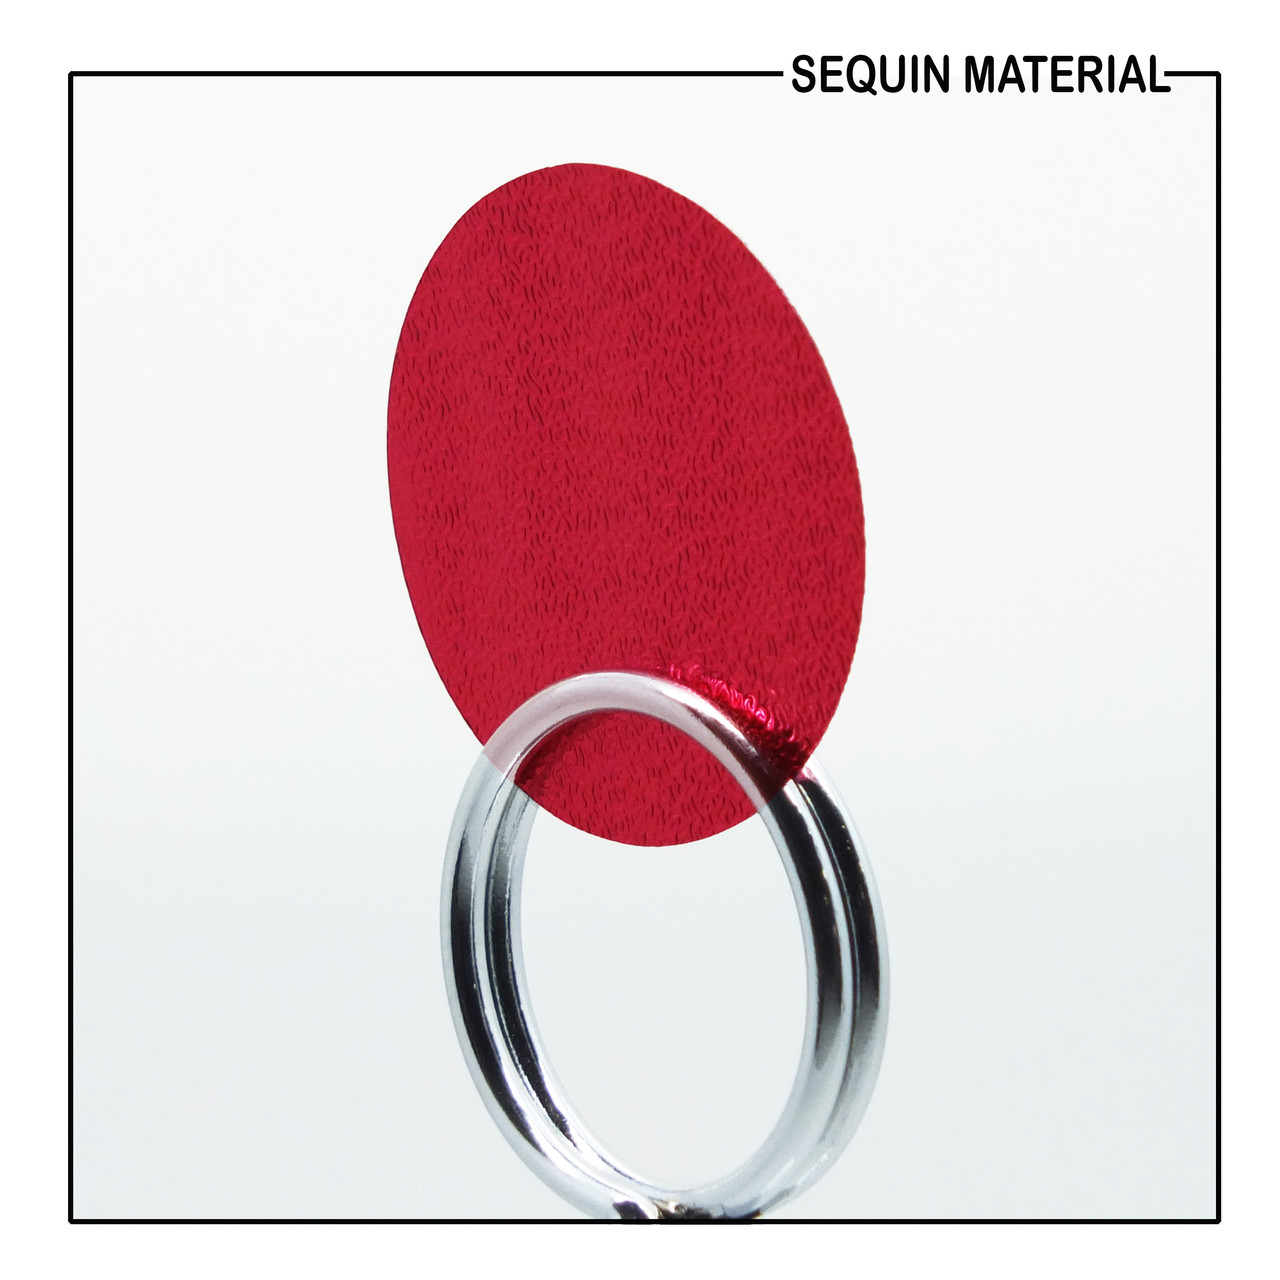 SequinsUSA Red Metallic Embossed Texture Sequin Material RL602